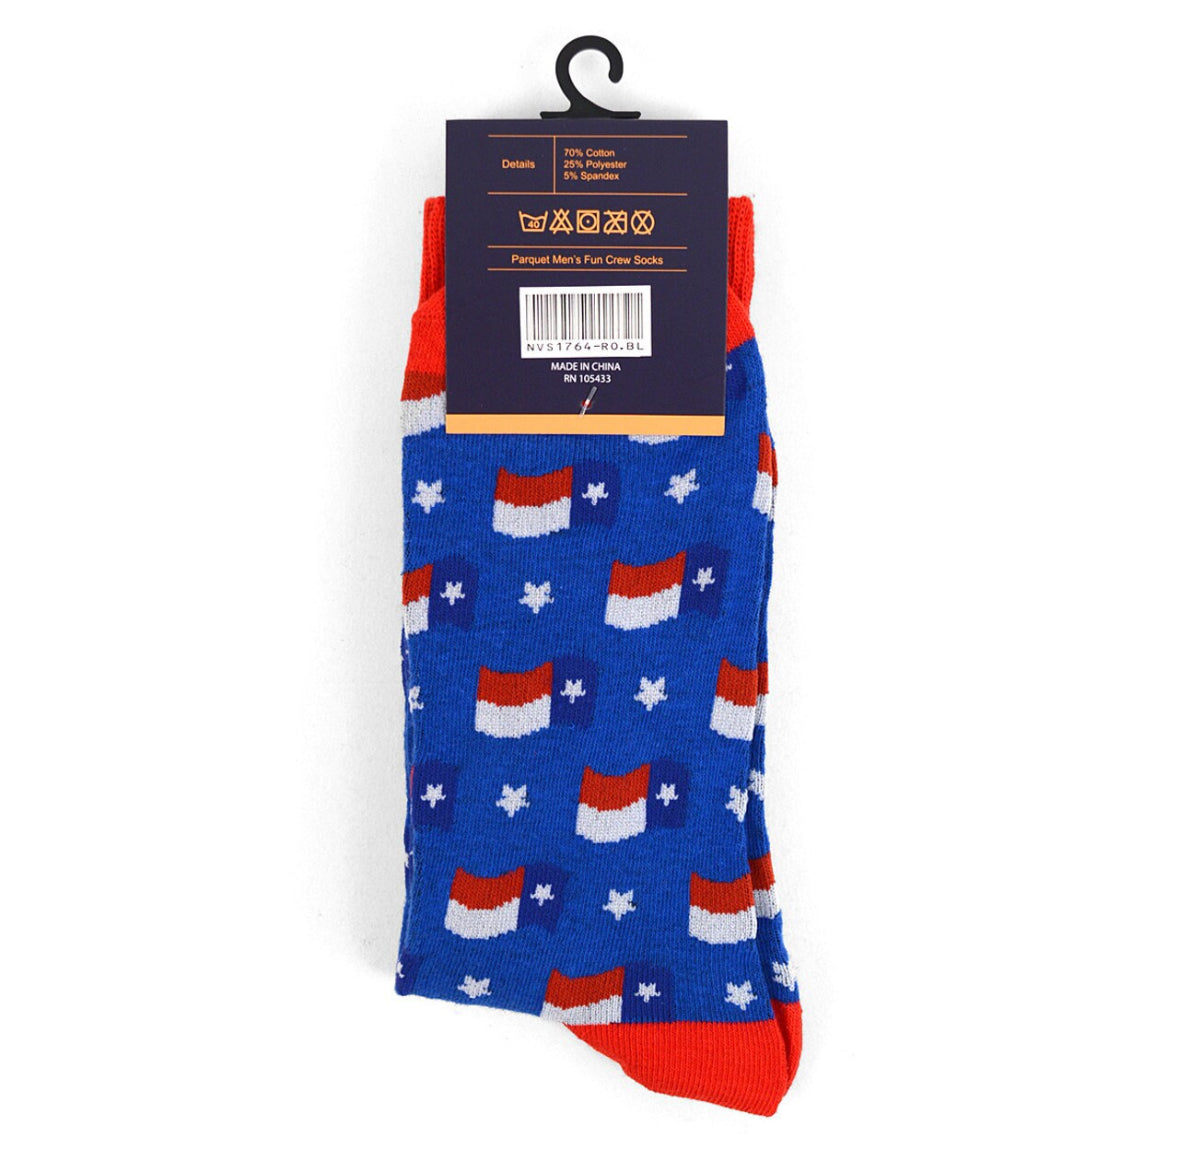 Fun Socks Men's Texas State Flag Novelty Socks Personalized Socks Dad Gifts Cool Socks Texas Socks Gift Cool Gift